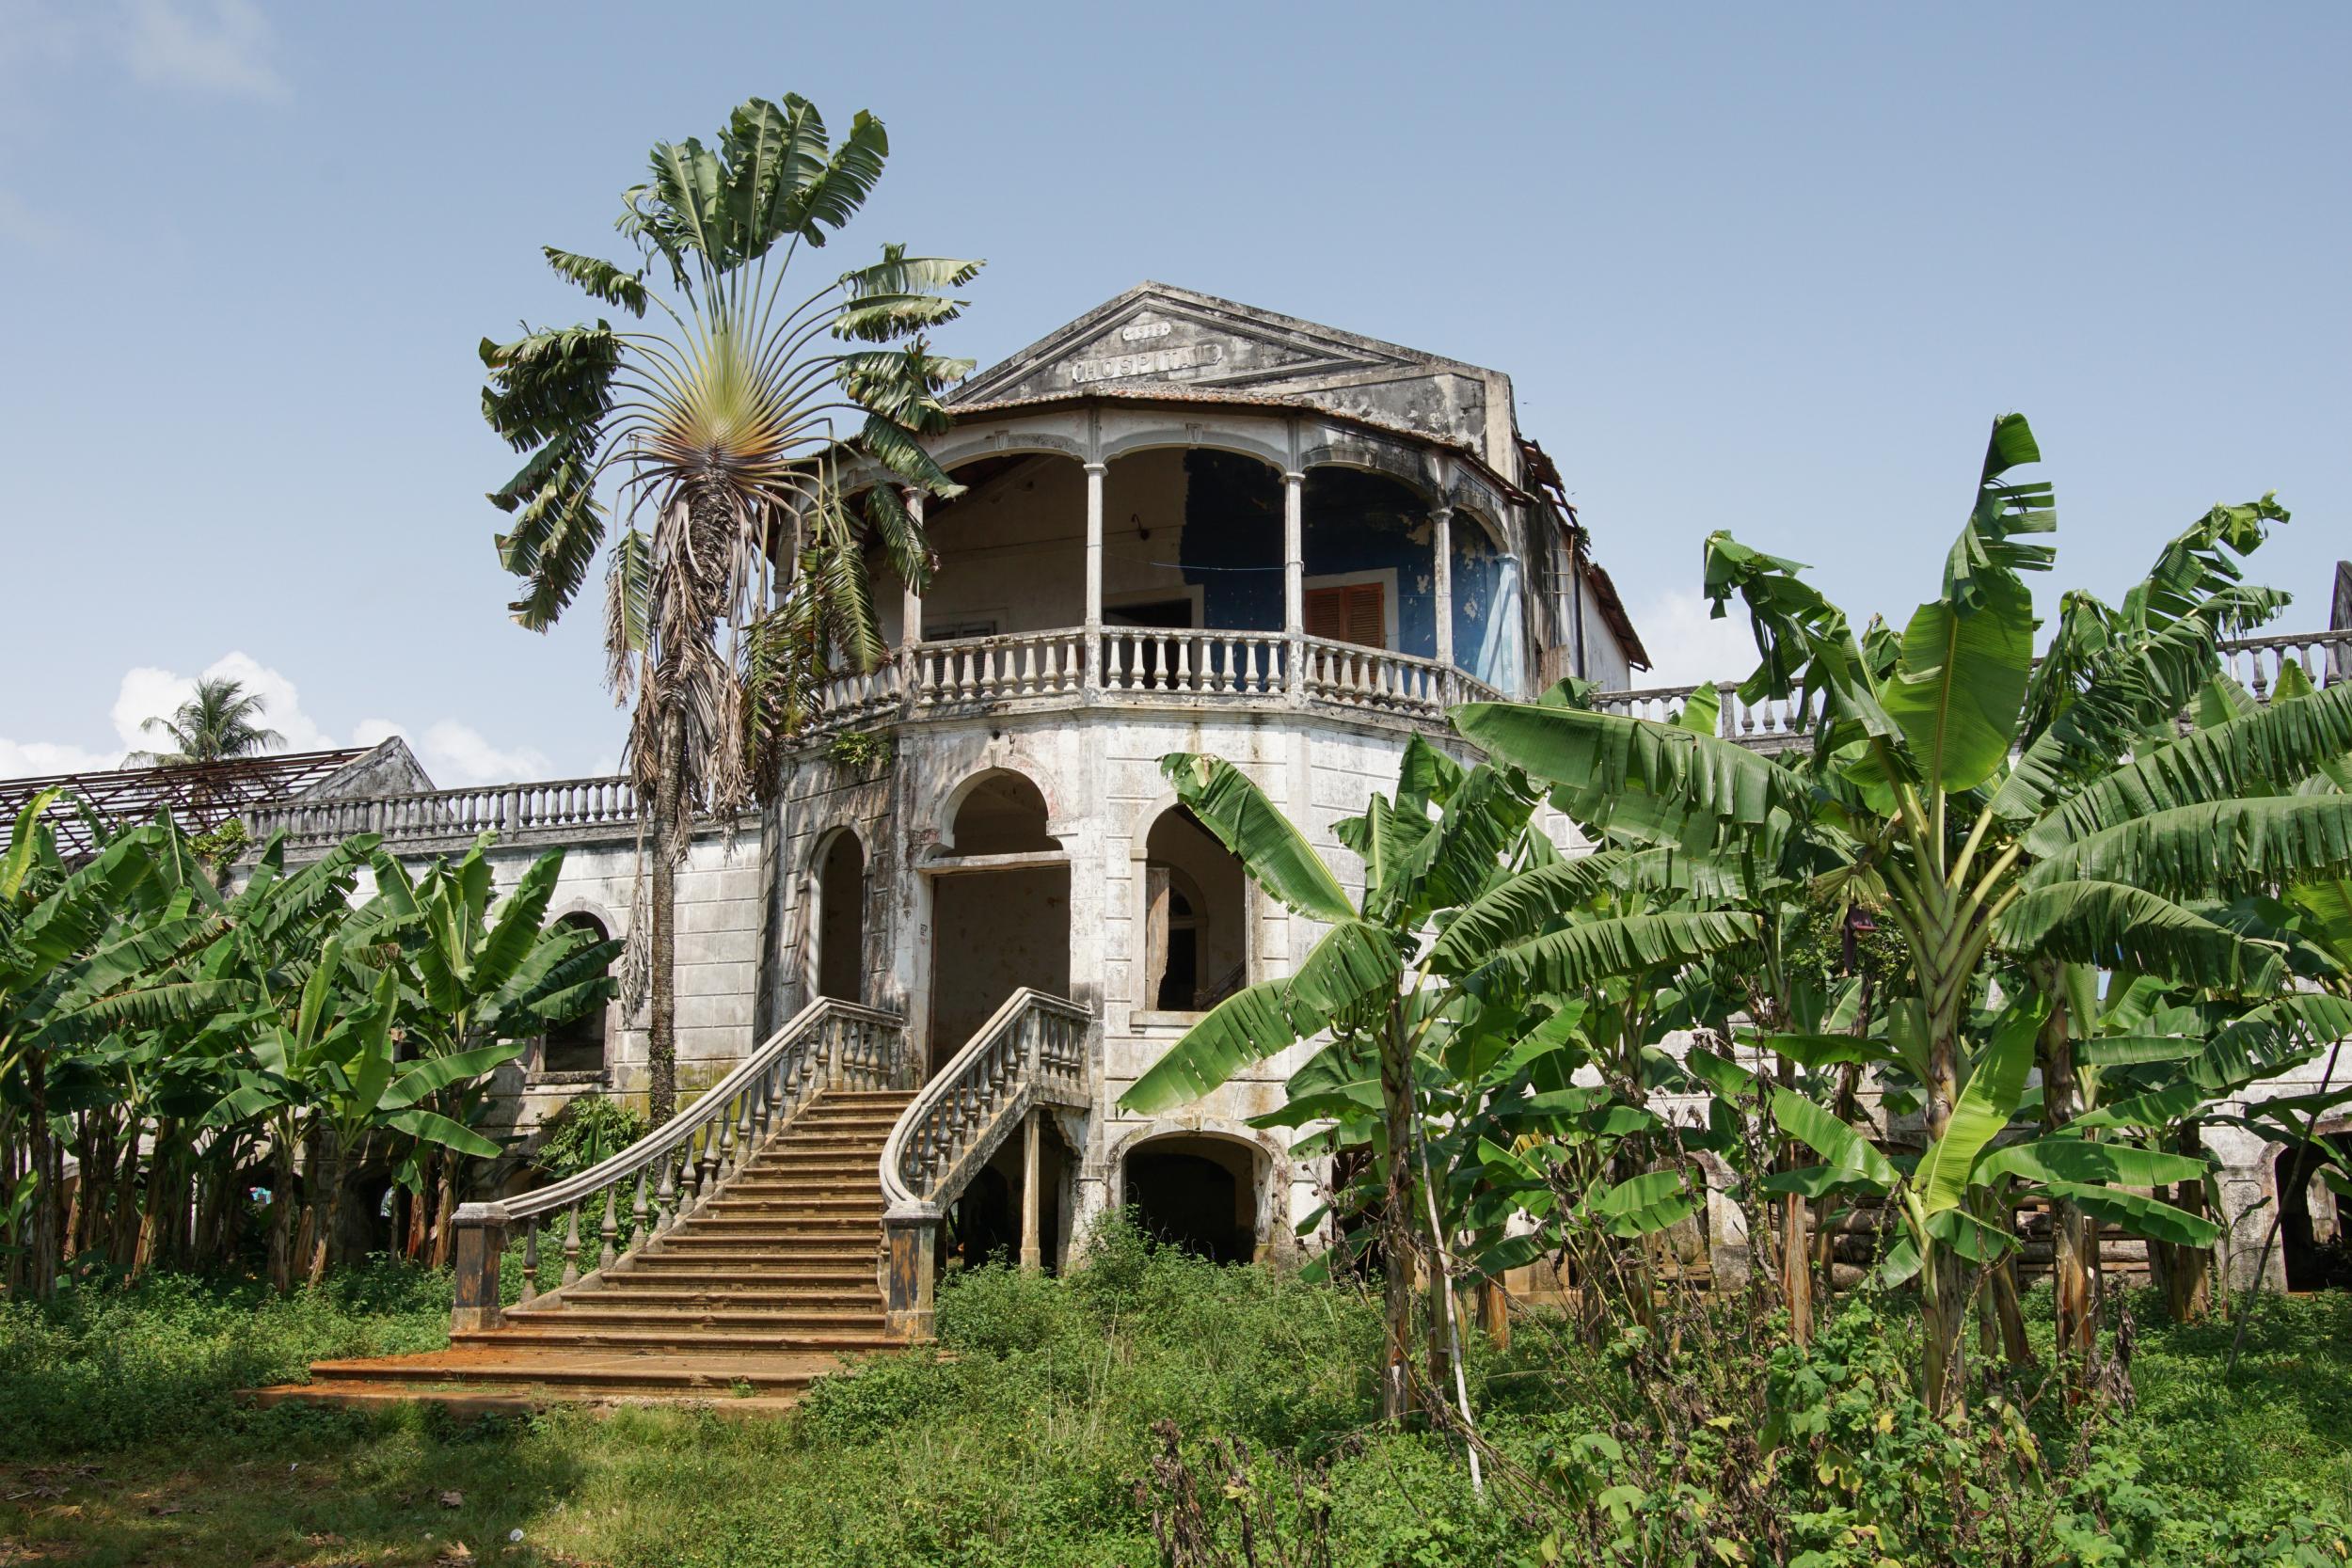 Travel tips to explore beautiful islands of Sao Tome and Principe, ghanatlksbusiness.com